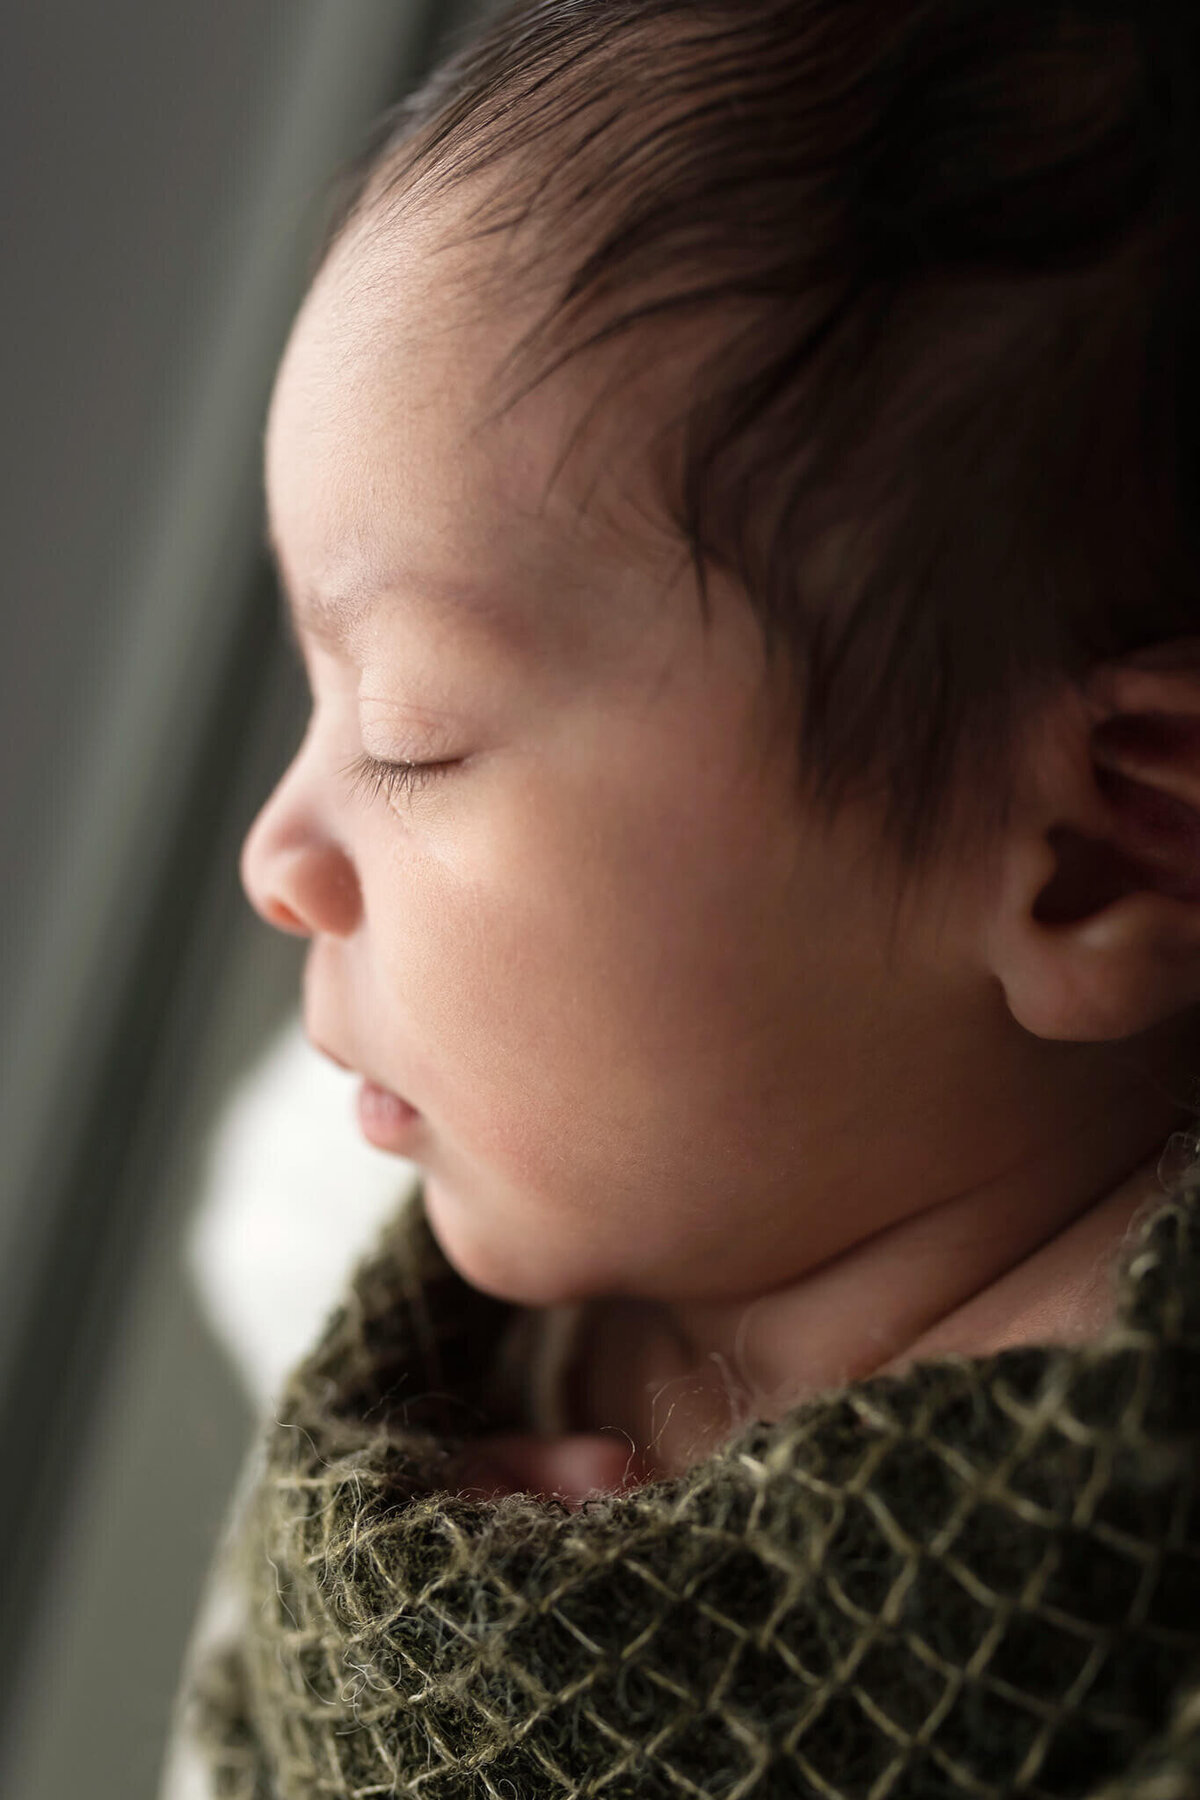 NJ Newborn photographer captures baby profile